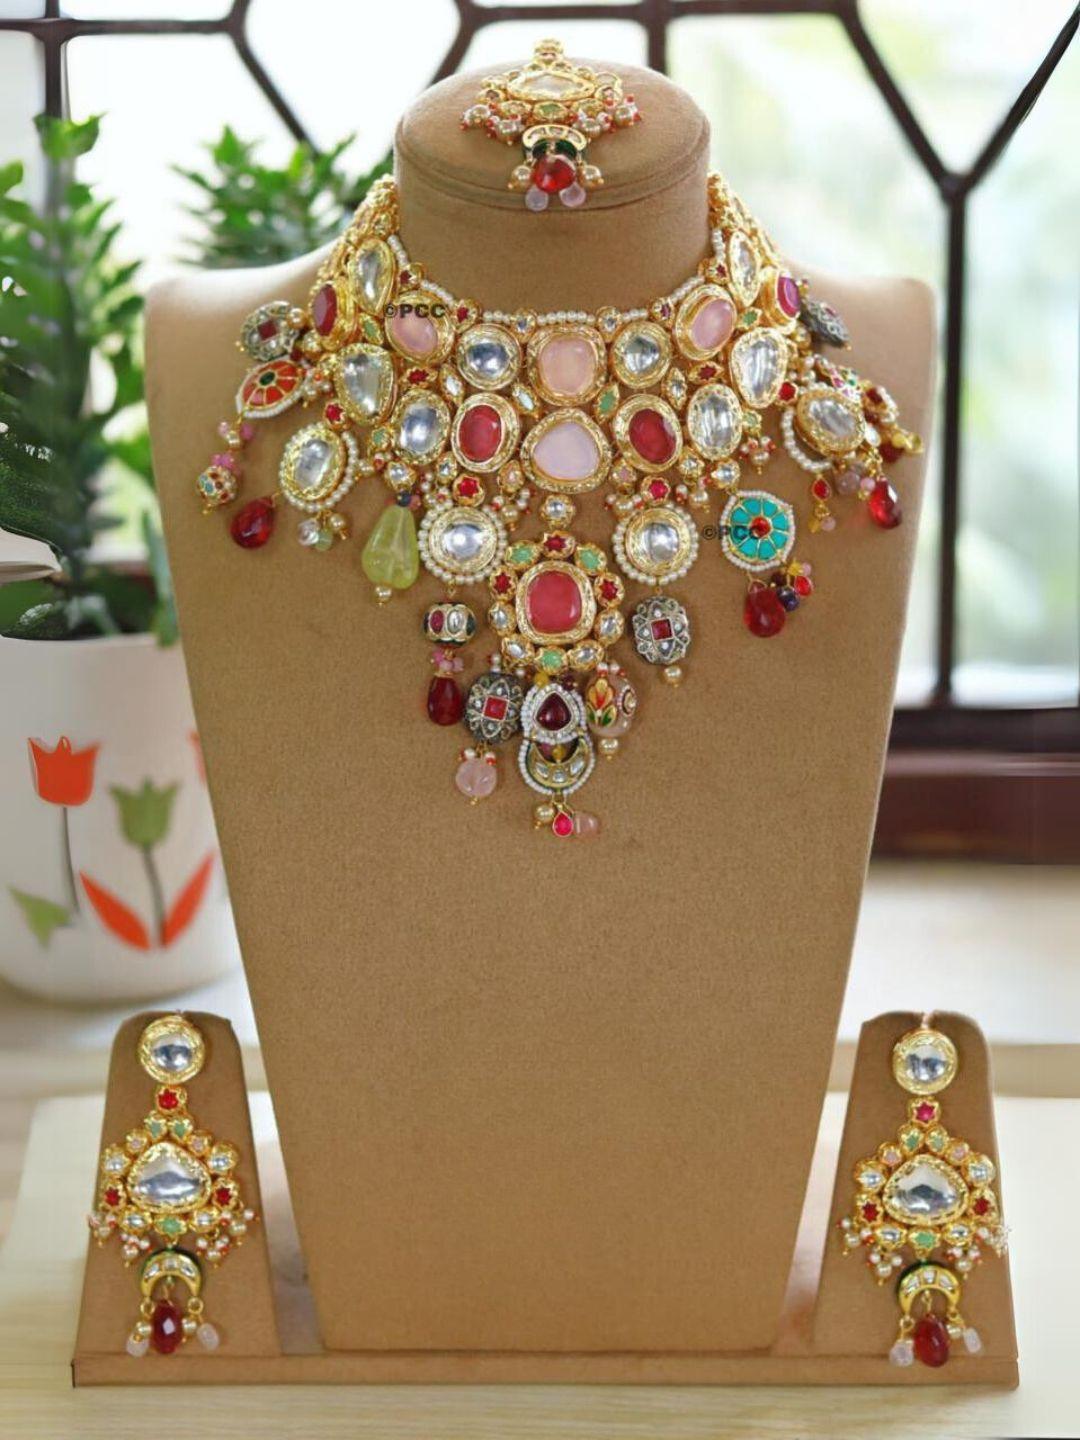 Ishhaara Deepika Padukone Inspired Polki Bridal Necklace